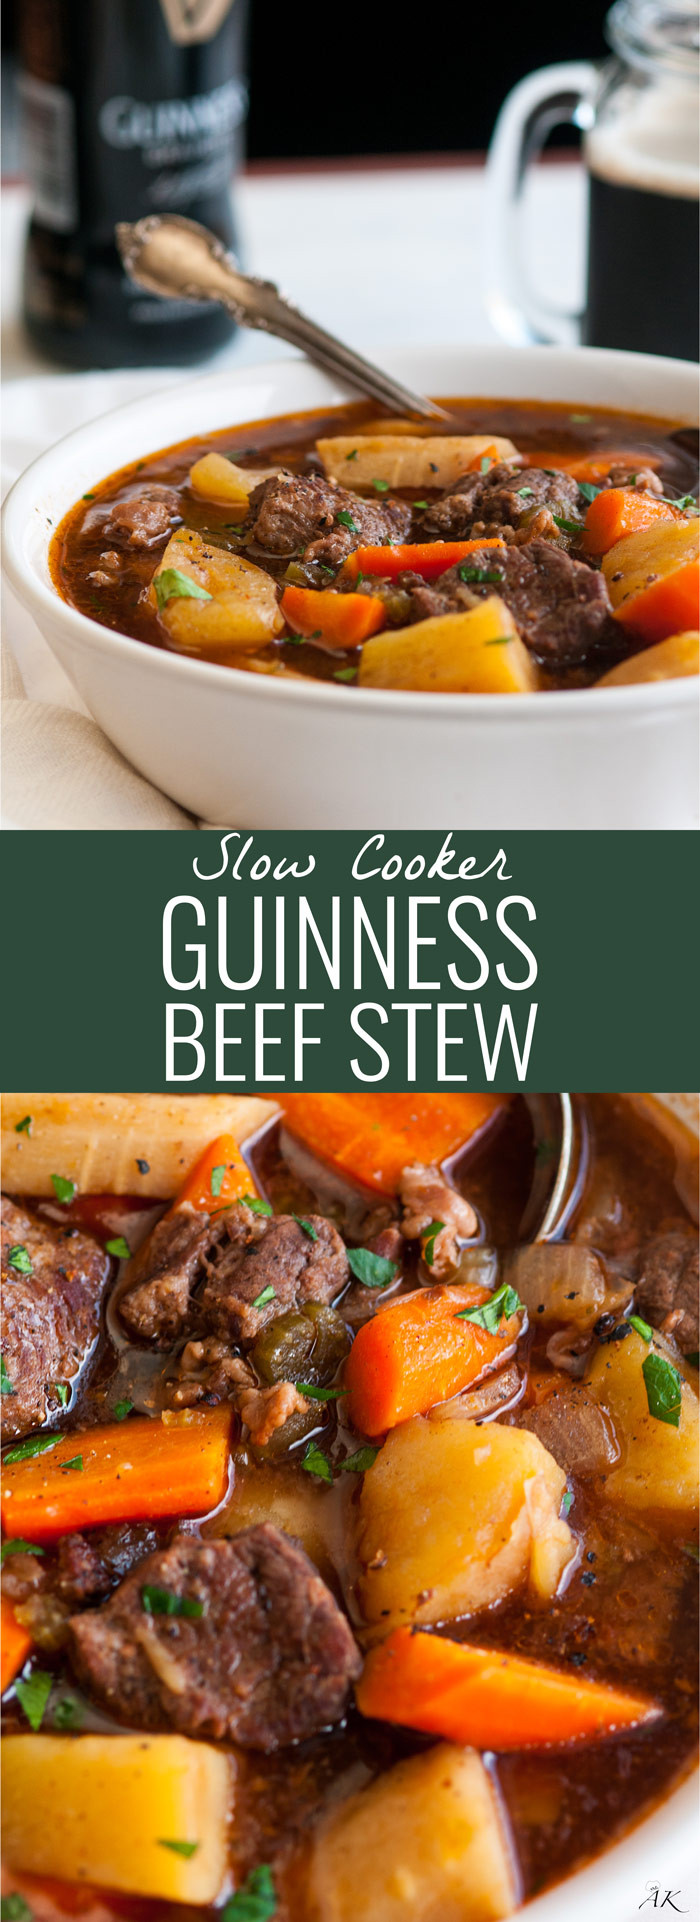 Guinness Stew Slow Cooker
 Slow Cooker Guinness Beef Stew Aberdeen s Kitchen